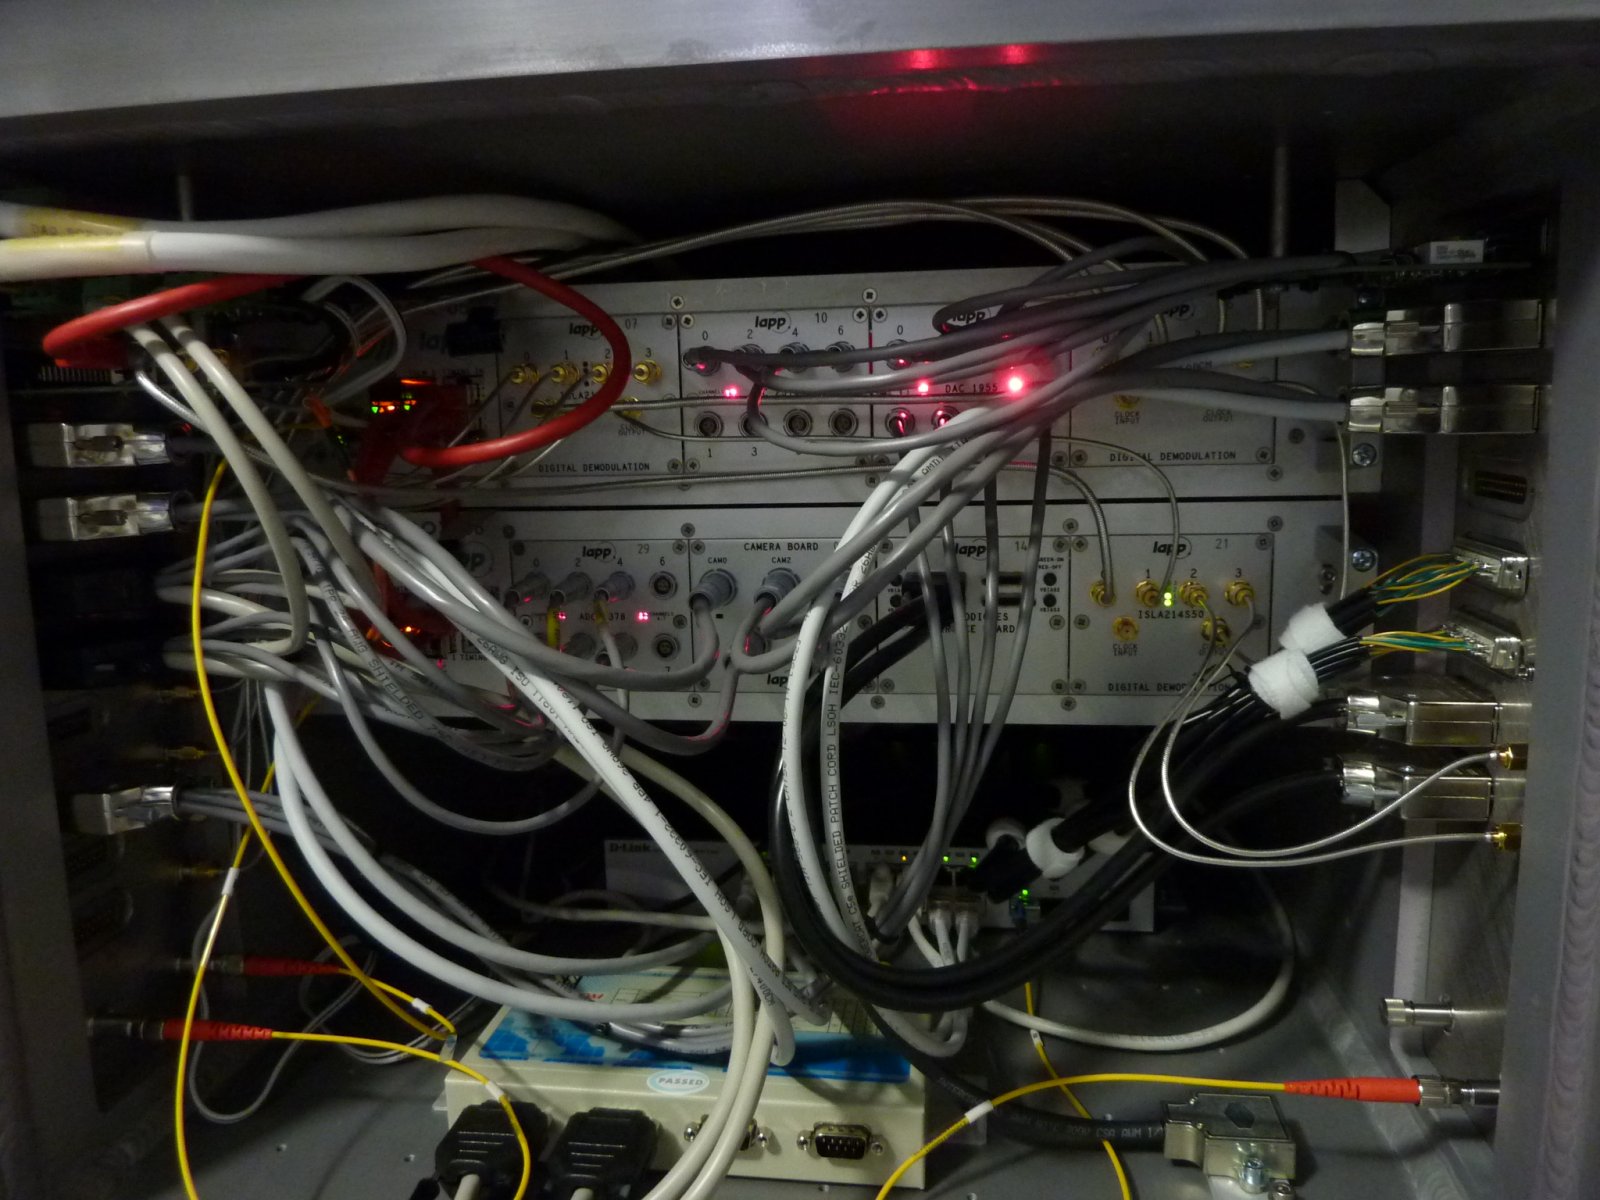 Electronics inside a "minitower" bench